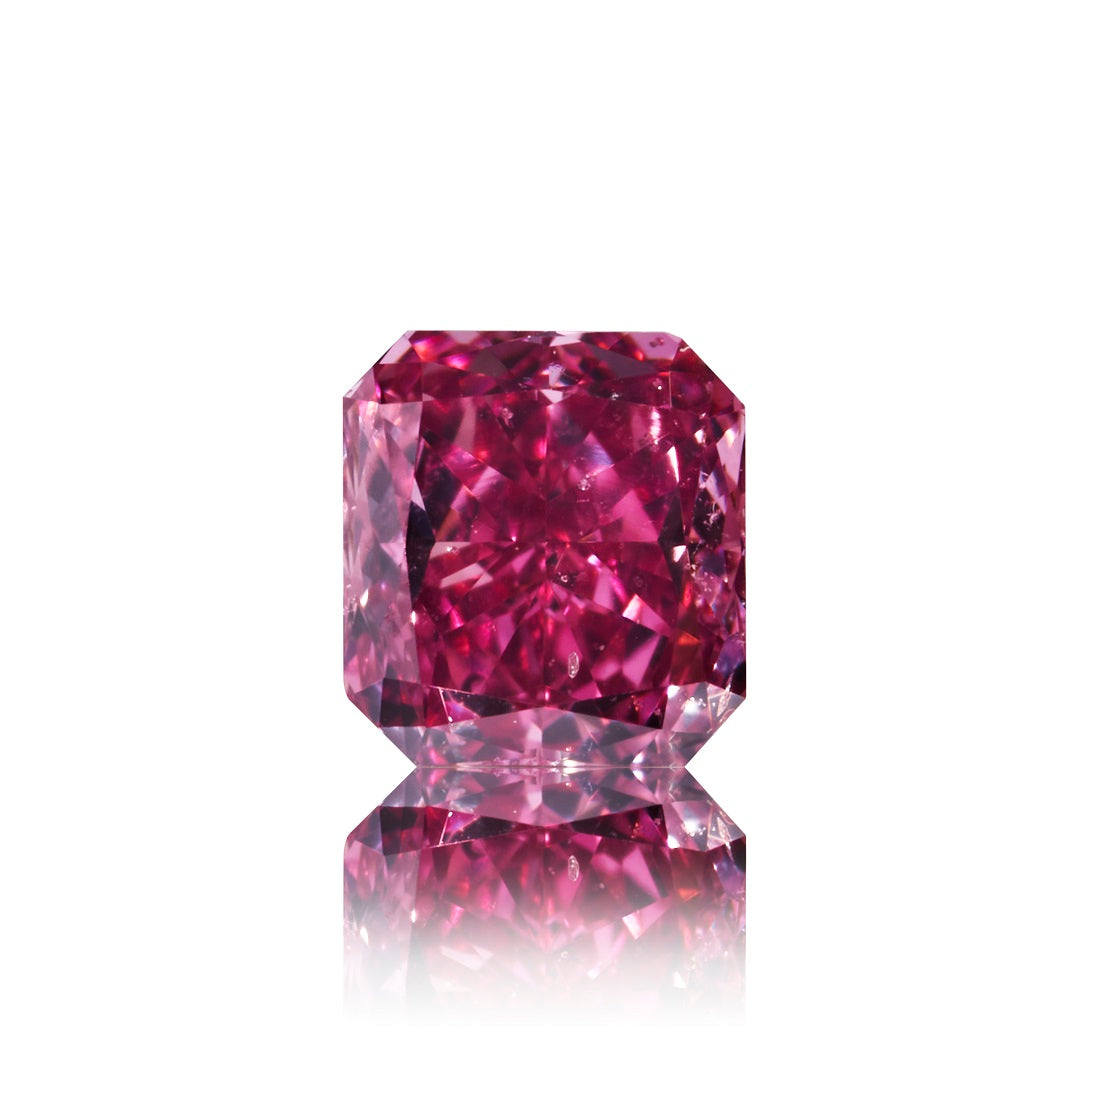 dialecto Arrepentimiento Detenerse Argyle Pink radiant cut diamond 0.12ct – Hartmann's